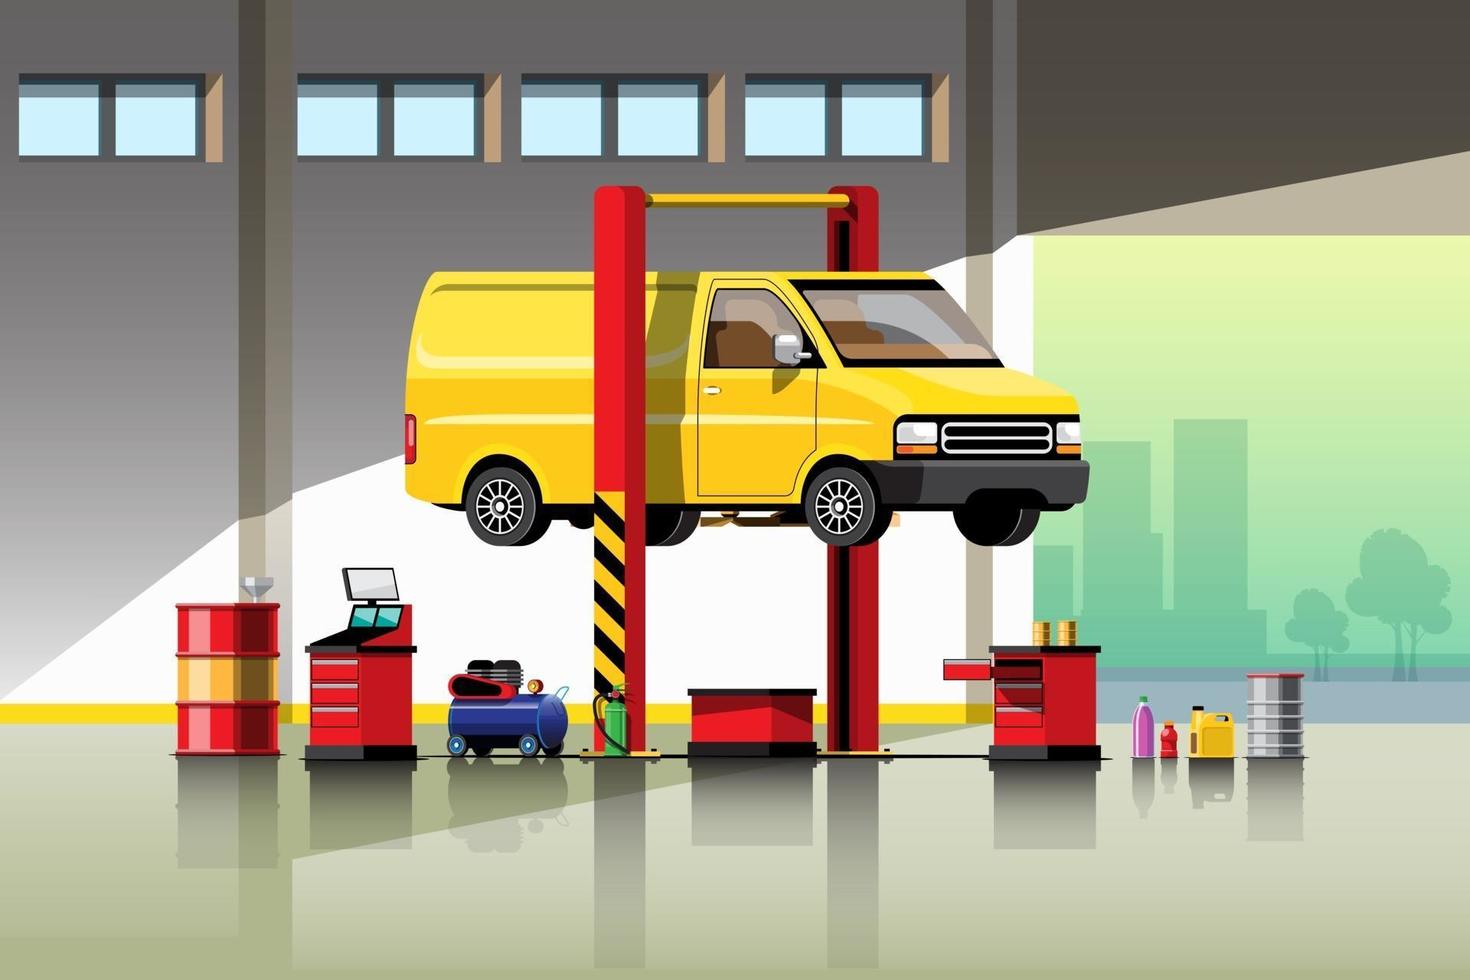 Automobile repair and maintenance service concept vector illustration.